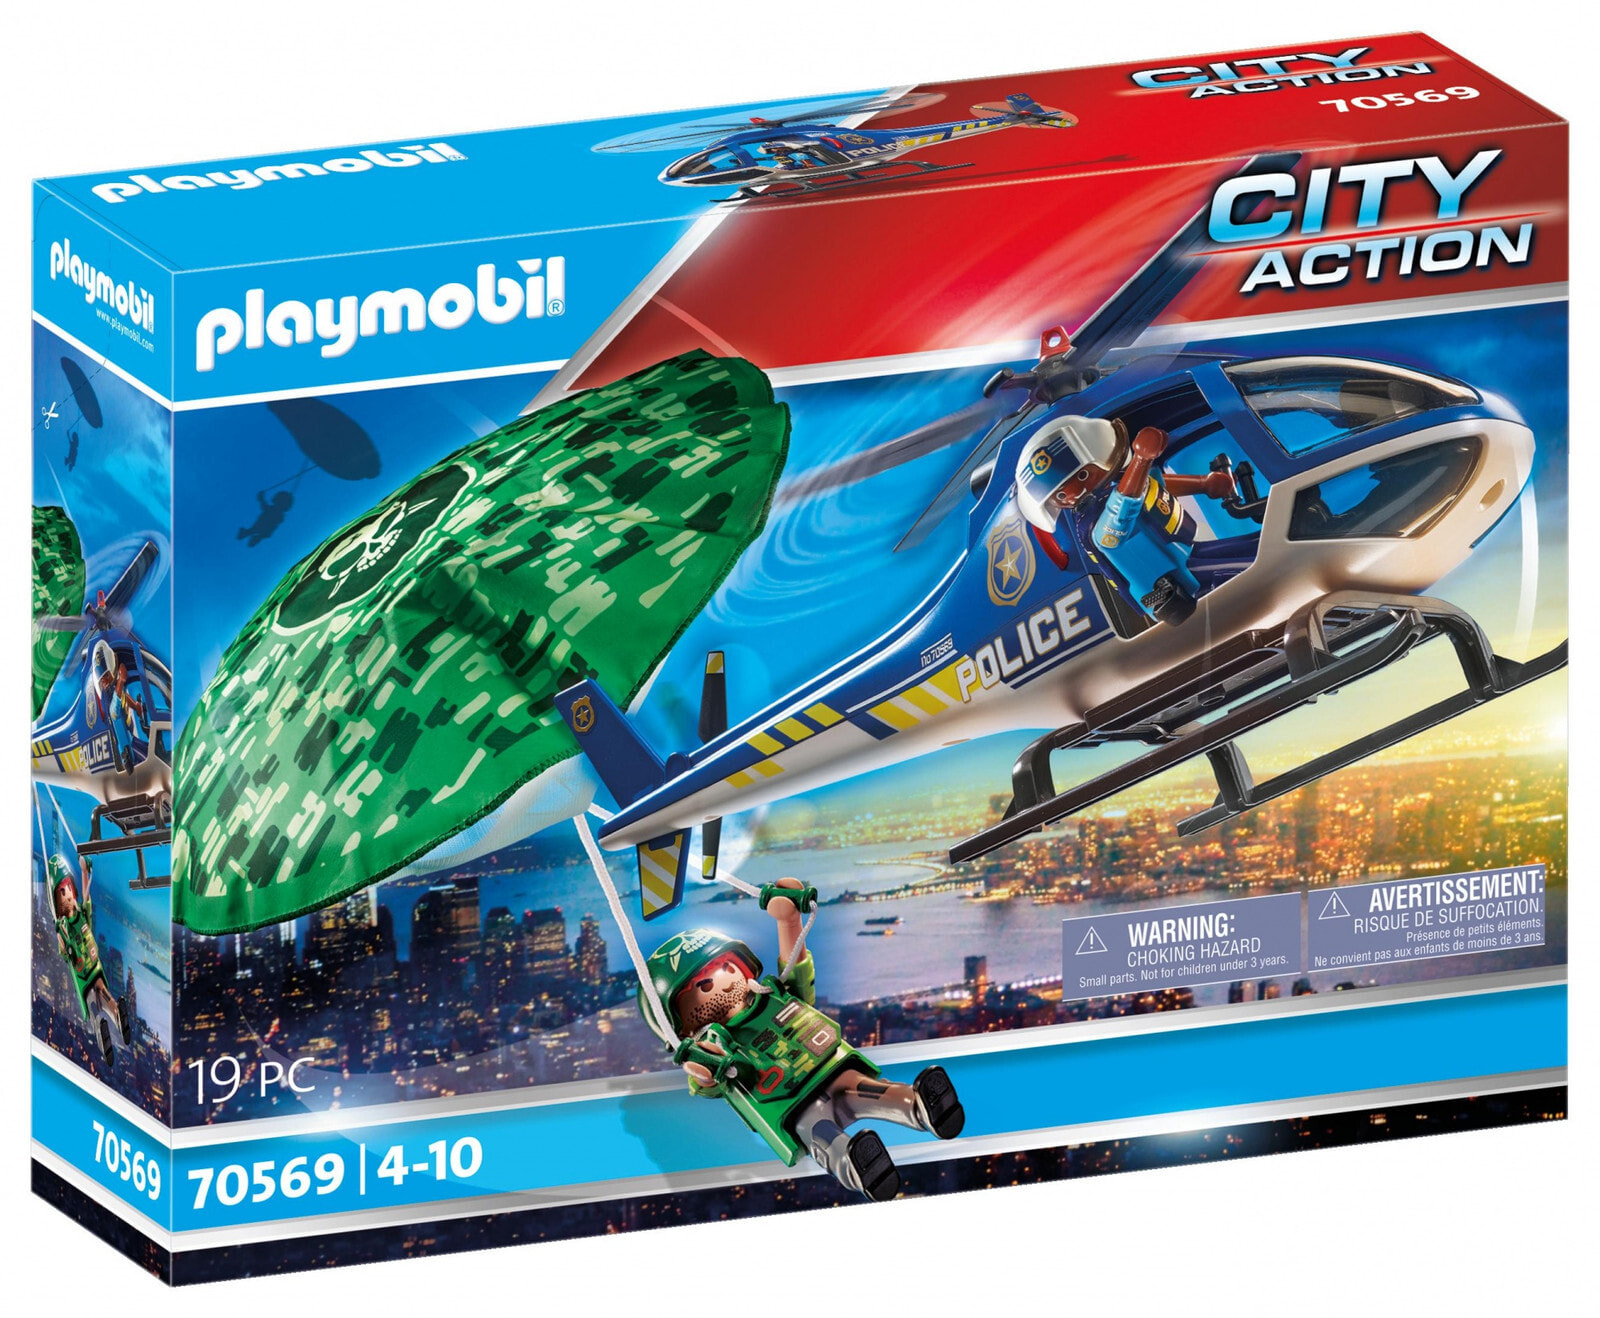 Playmobil City Action 70569 набор детских фигурок